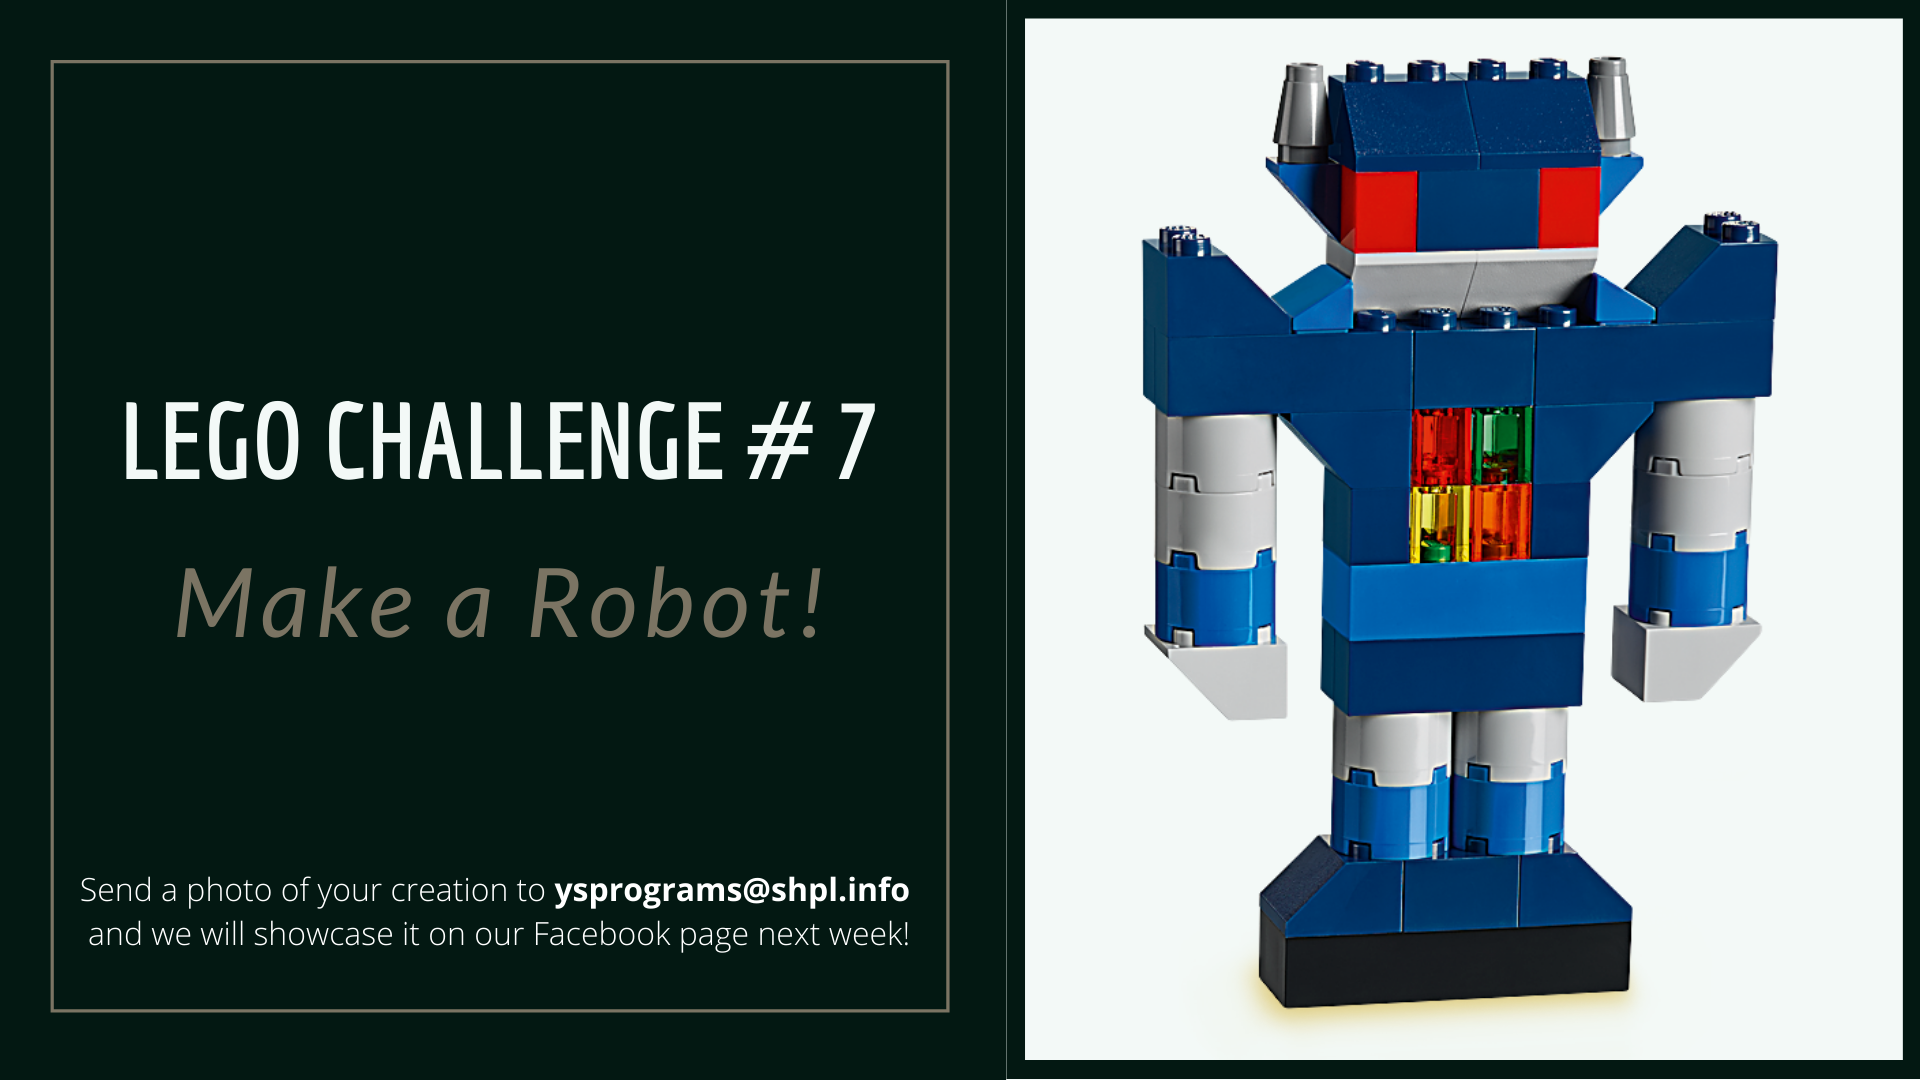 Lego Challenge # 7 - Make a Robot